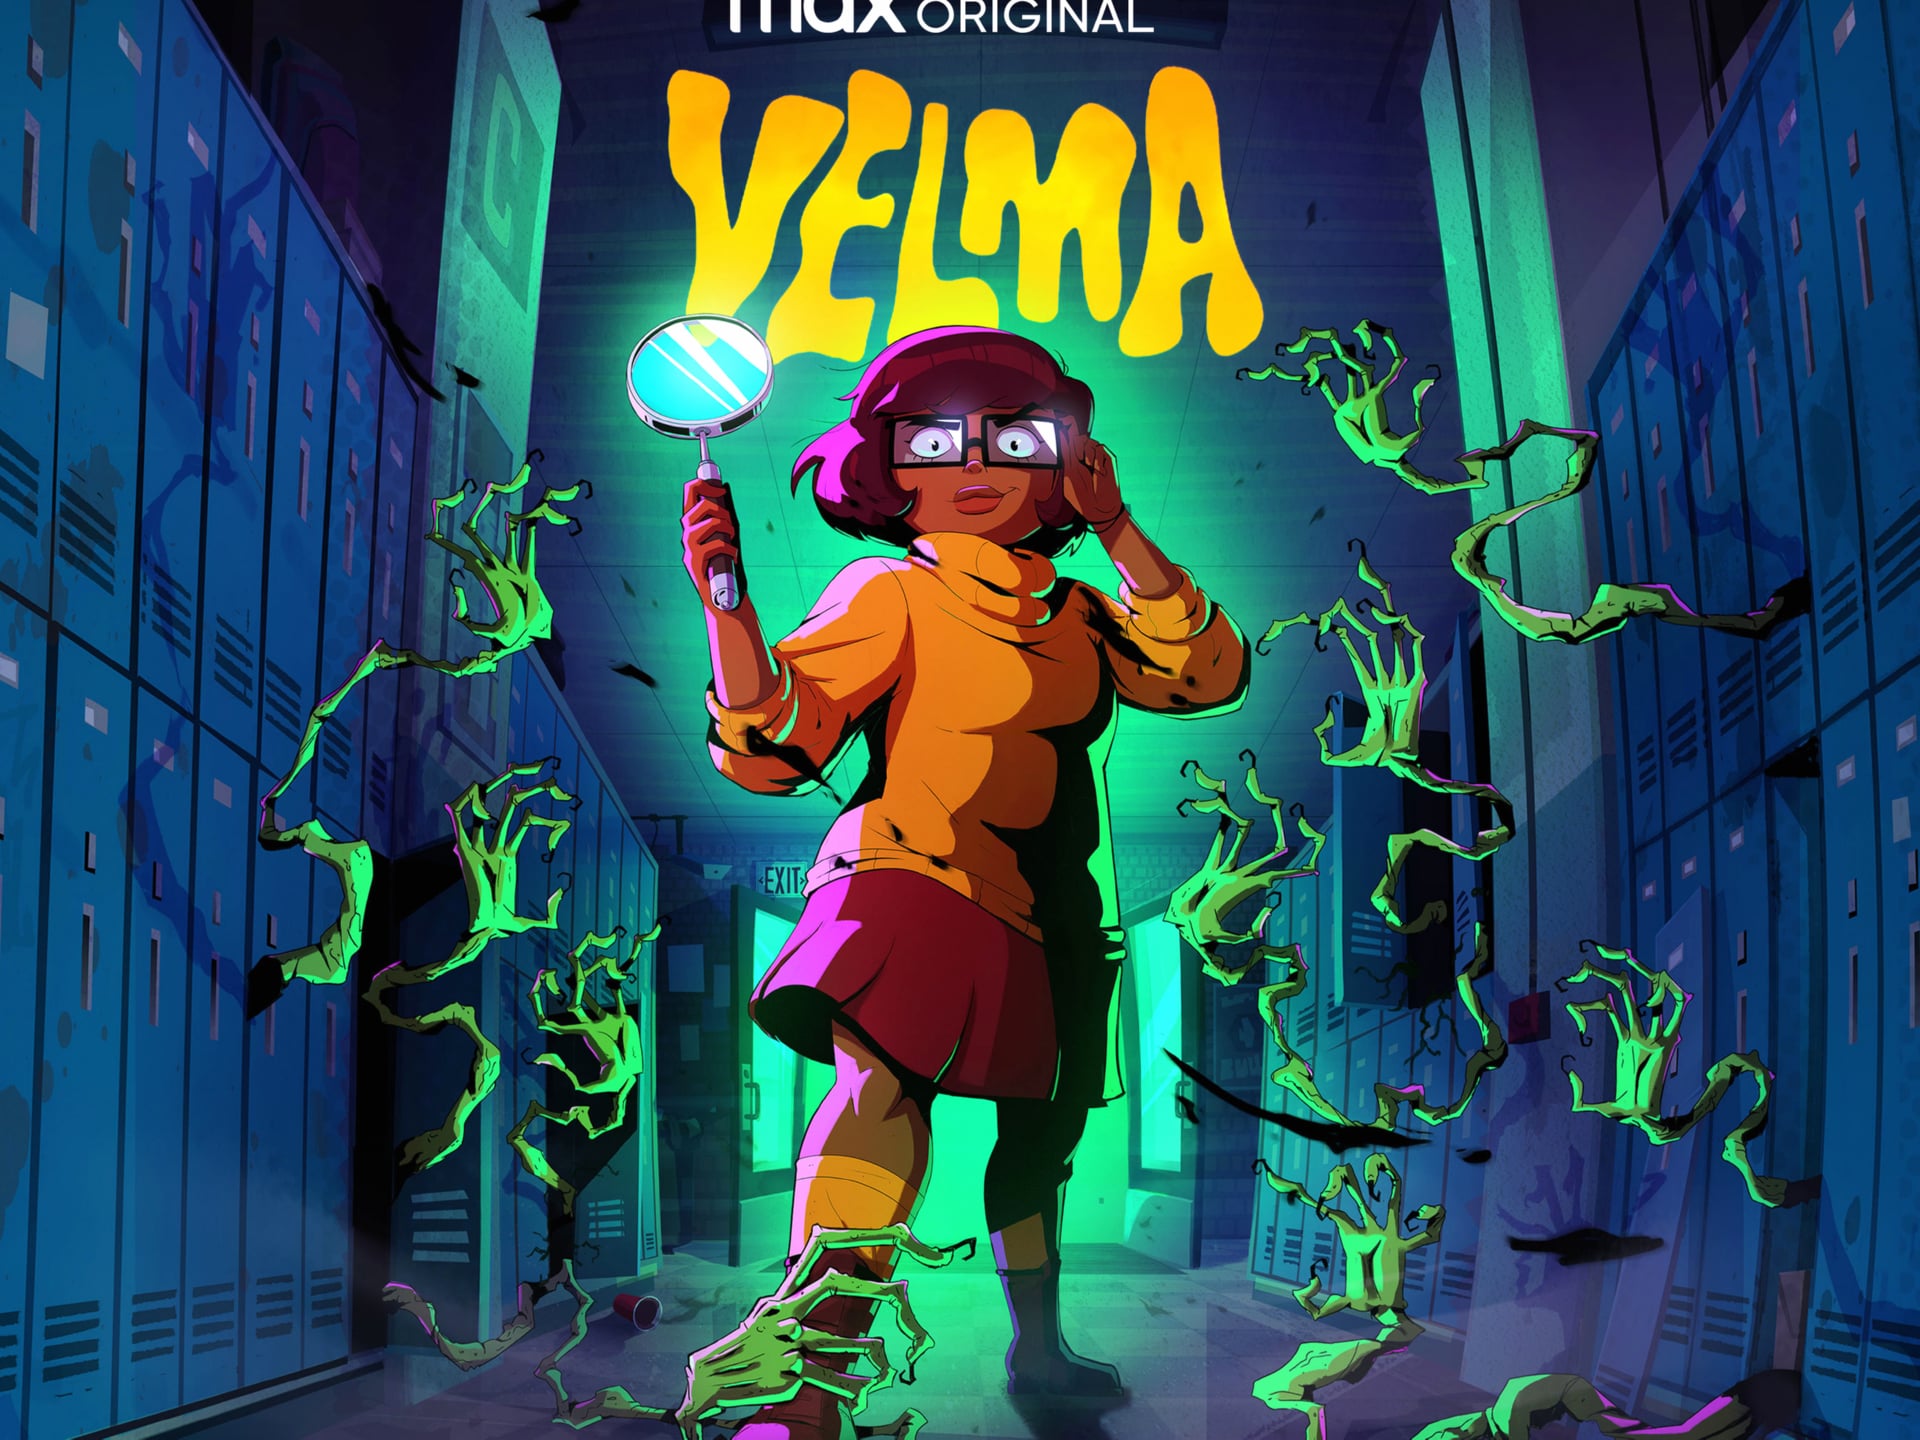 Velma at 1024 x 1024 iPad size wallpapers HD quality